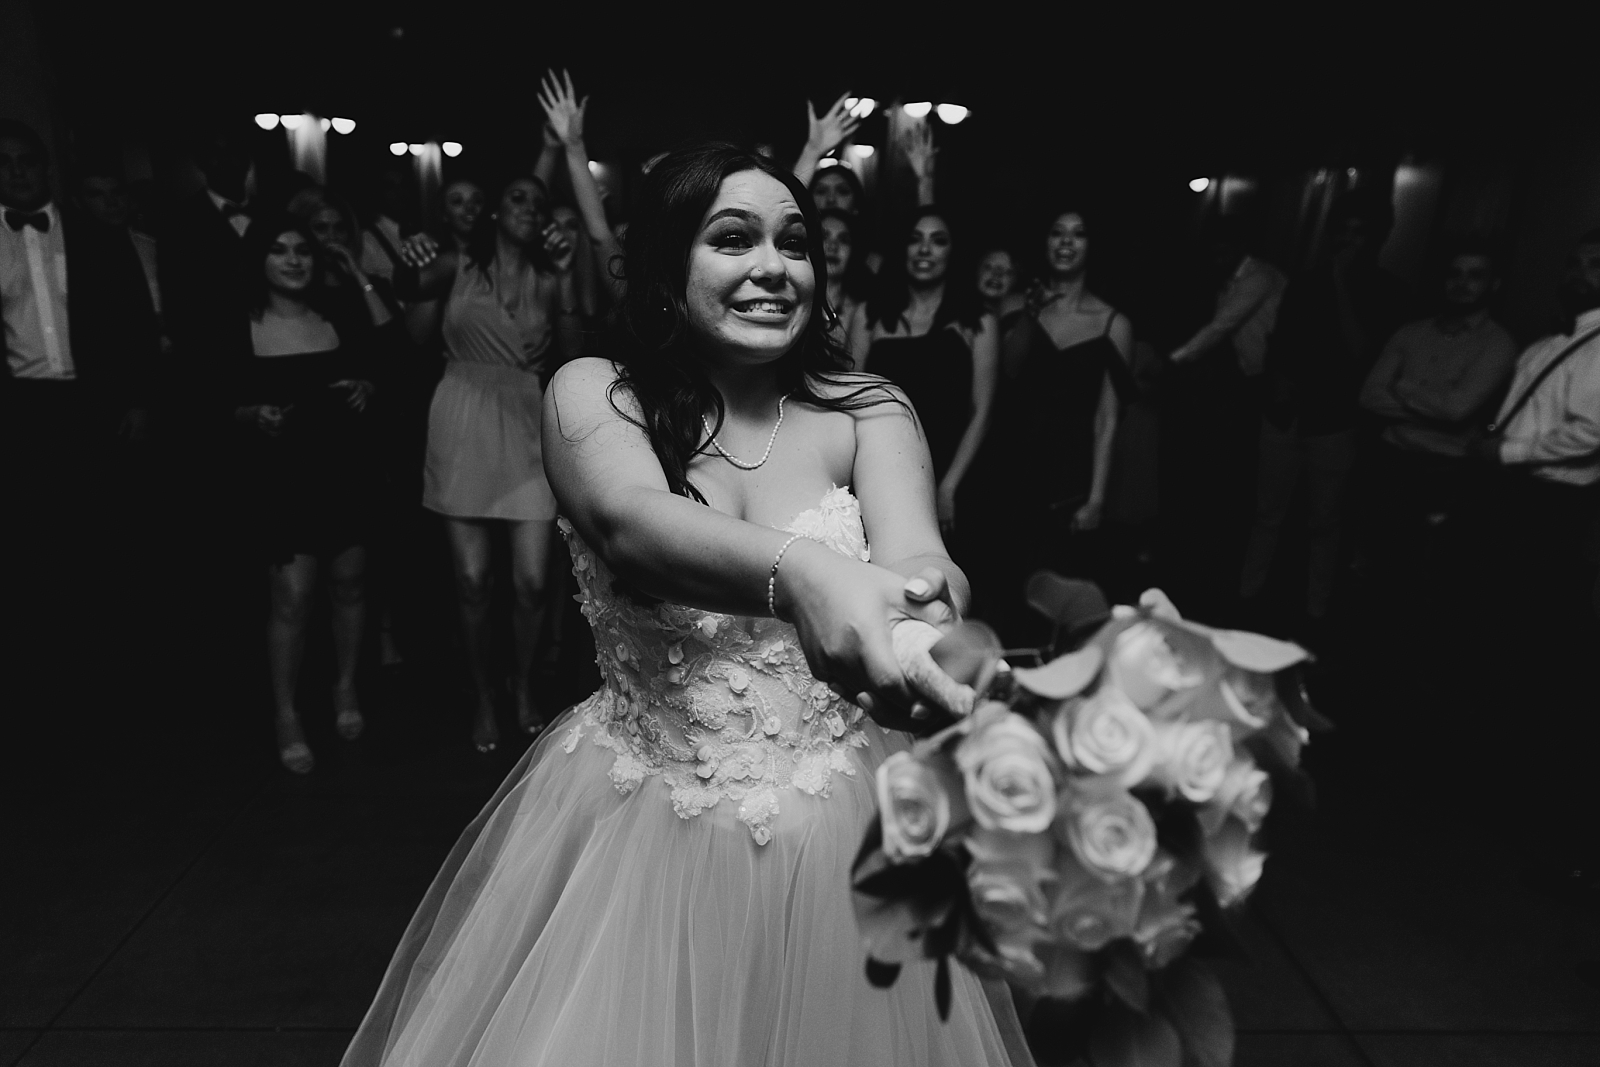 fun reception dancing bouquet toss Shenandoah Mill wedding photographer Gilbert AZ Arizona Samantha Patri Photography